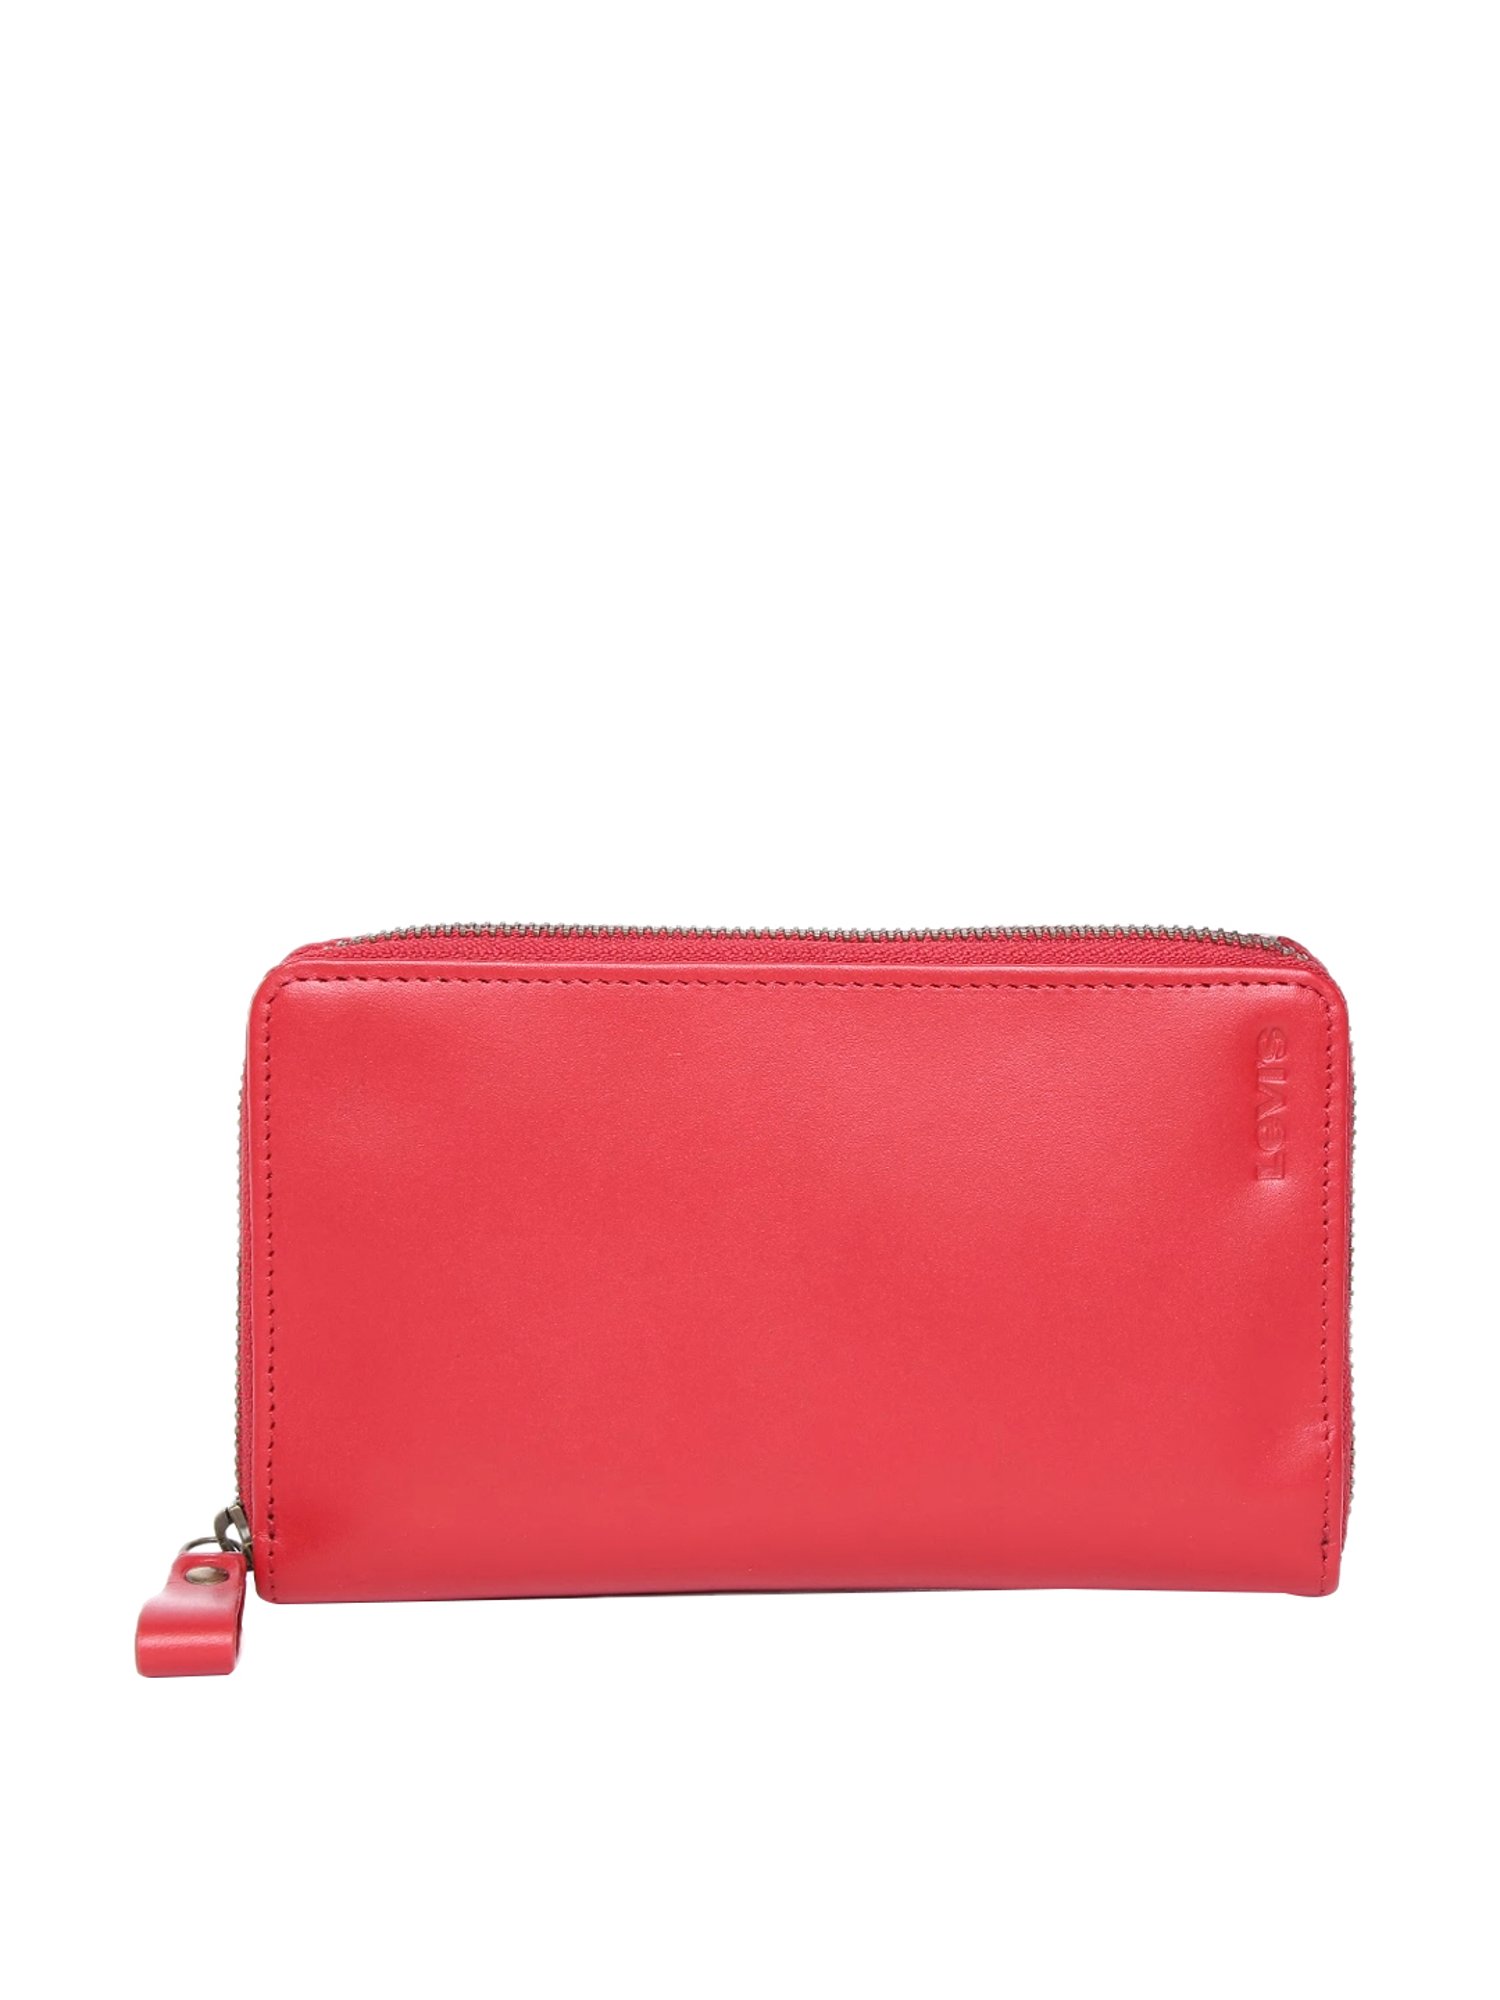 Buy Lavie Women's Fally Medium Satchel Bag D Pink Ladies Purse Handbag at  Amazon.in